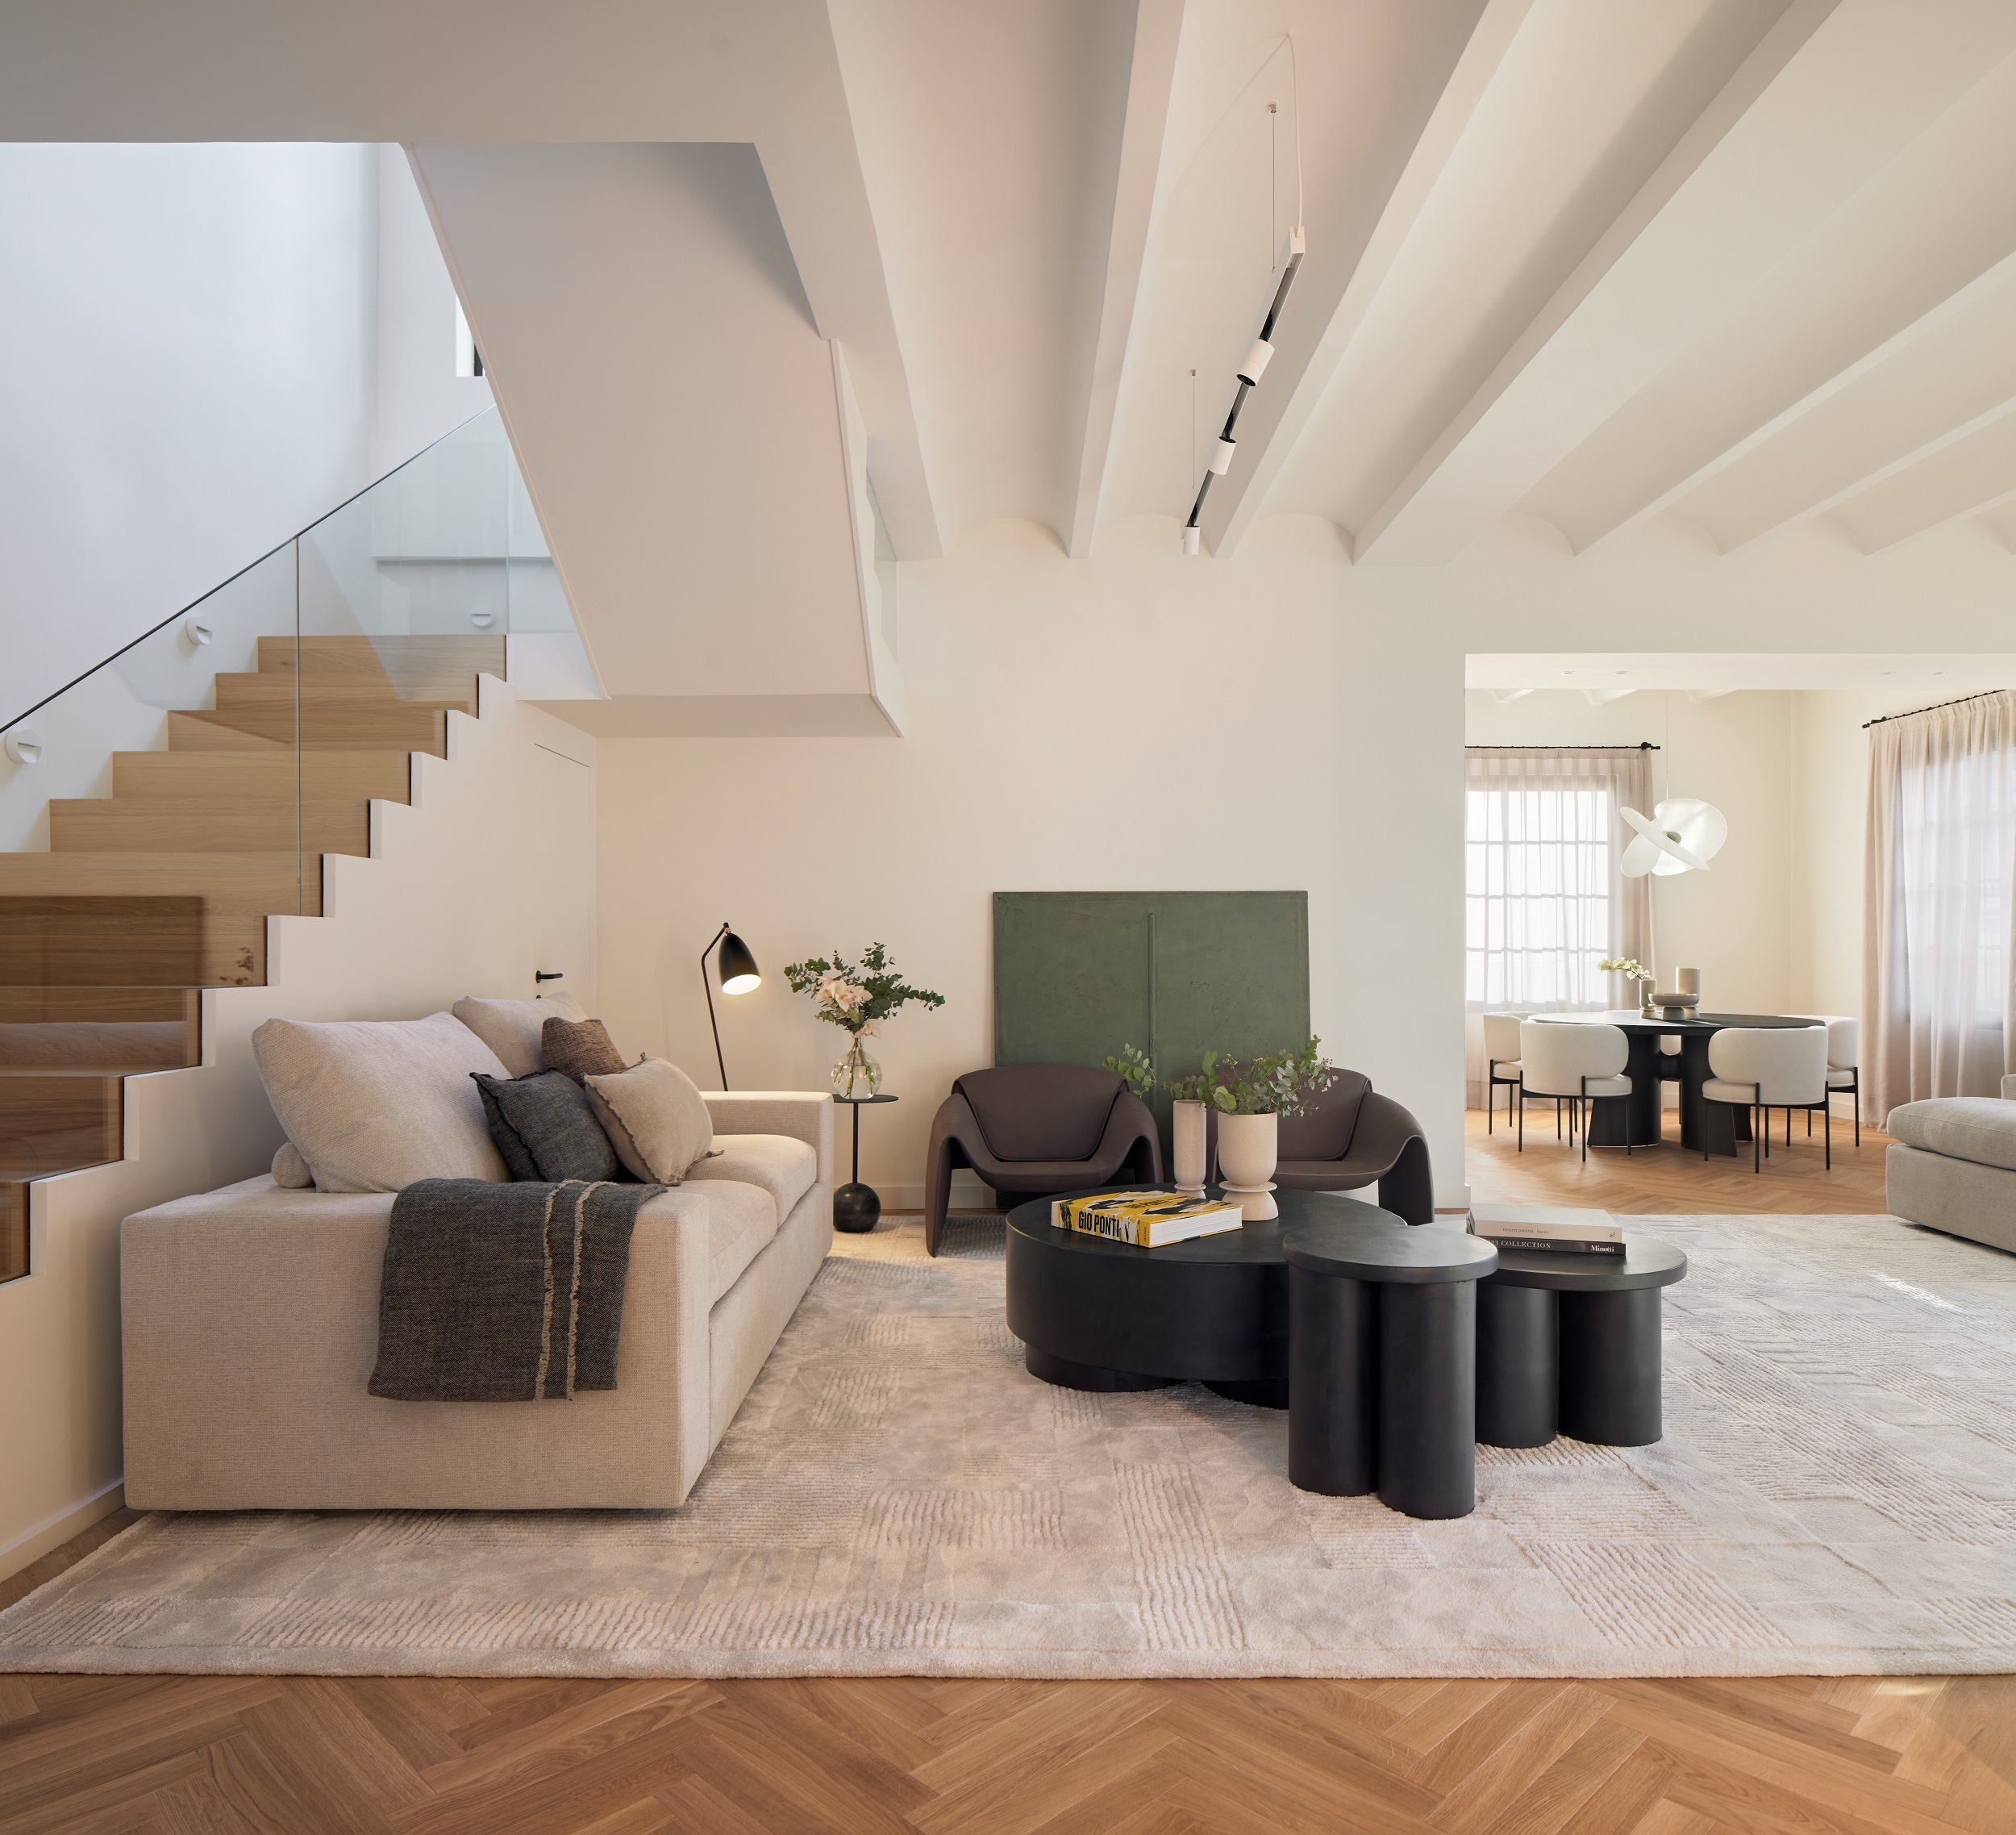 Pedralbes AV. Penthouse LUV Studio Living Room 4 - LUV Studio - Architecture et design - Barcelone